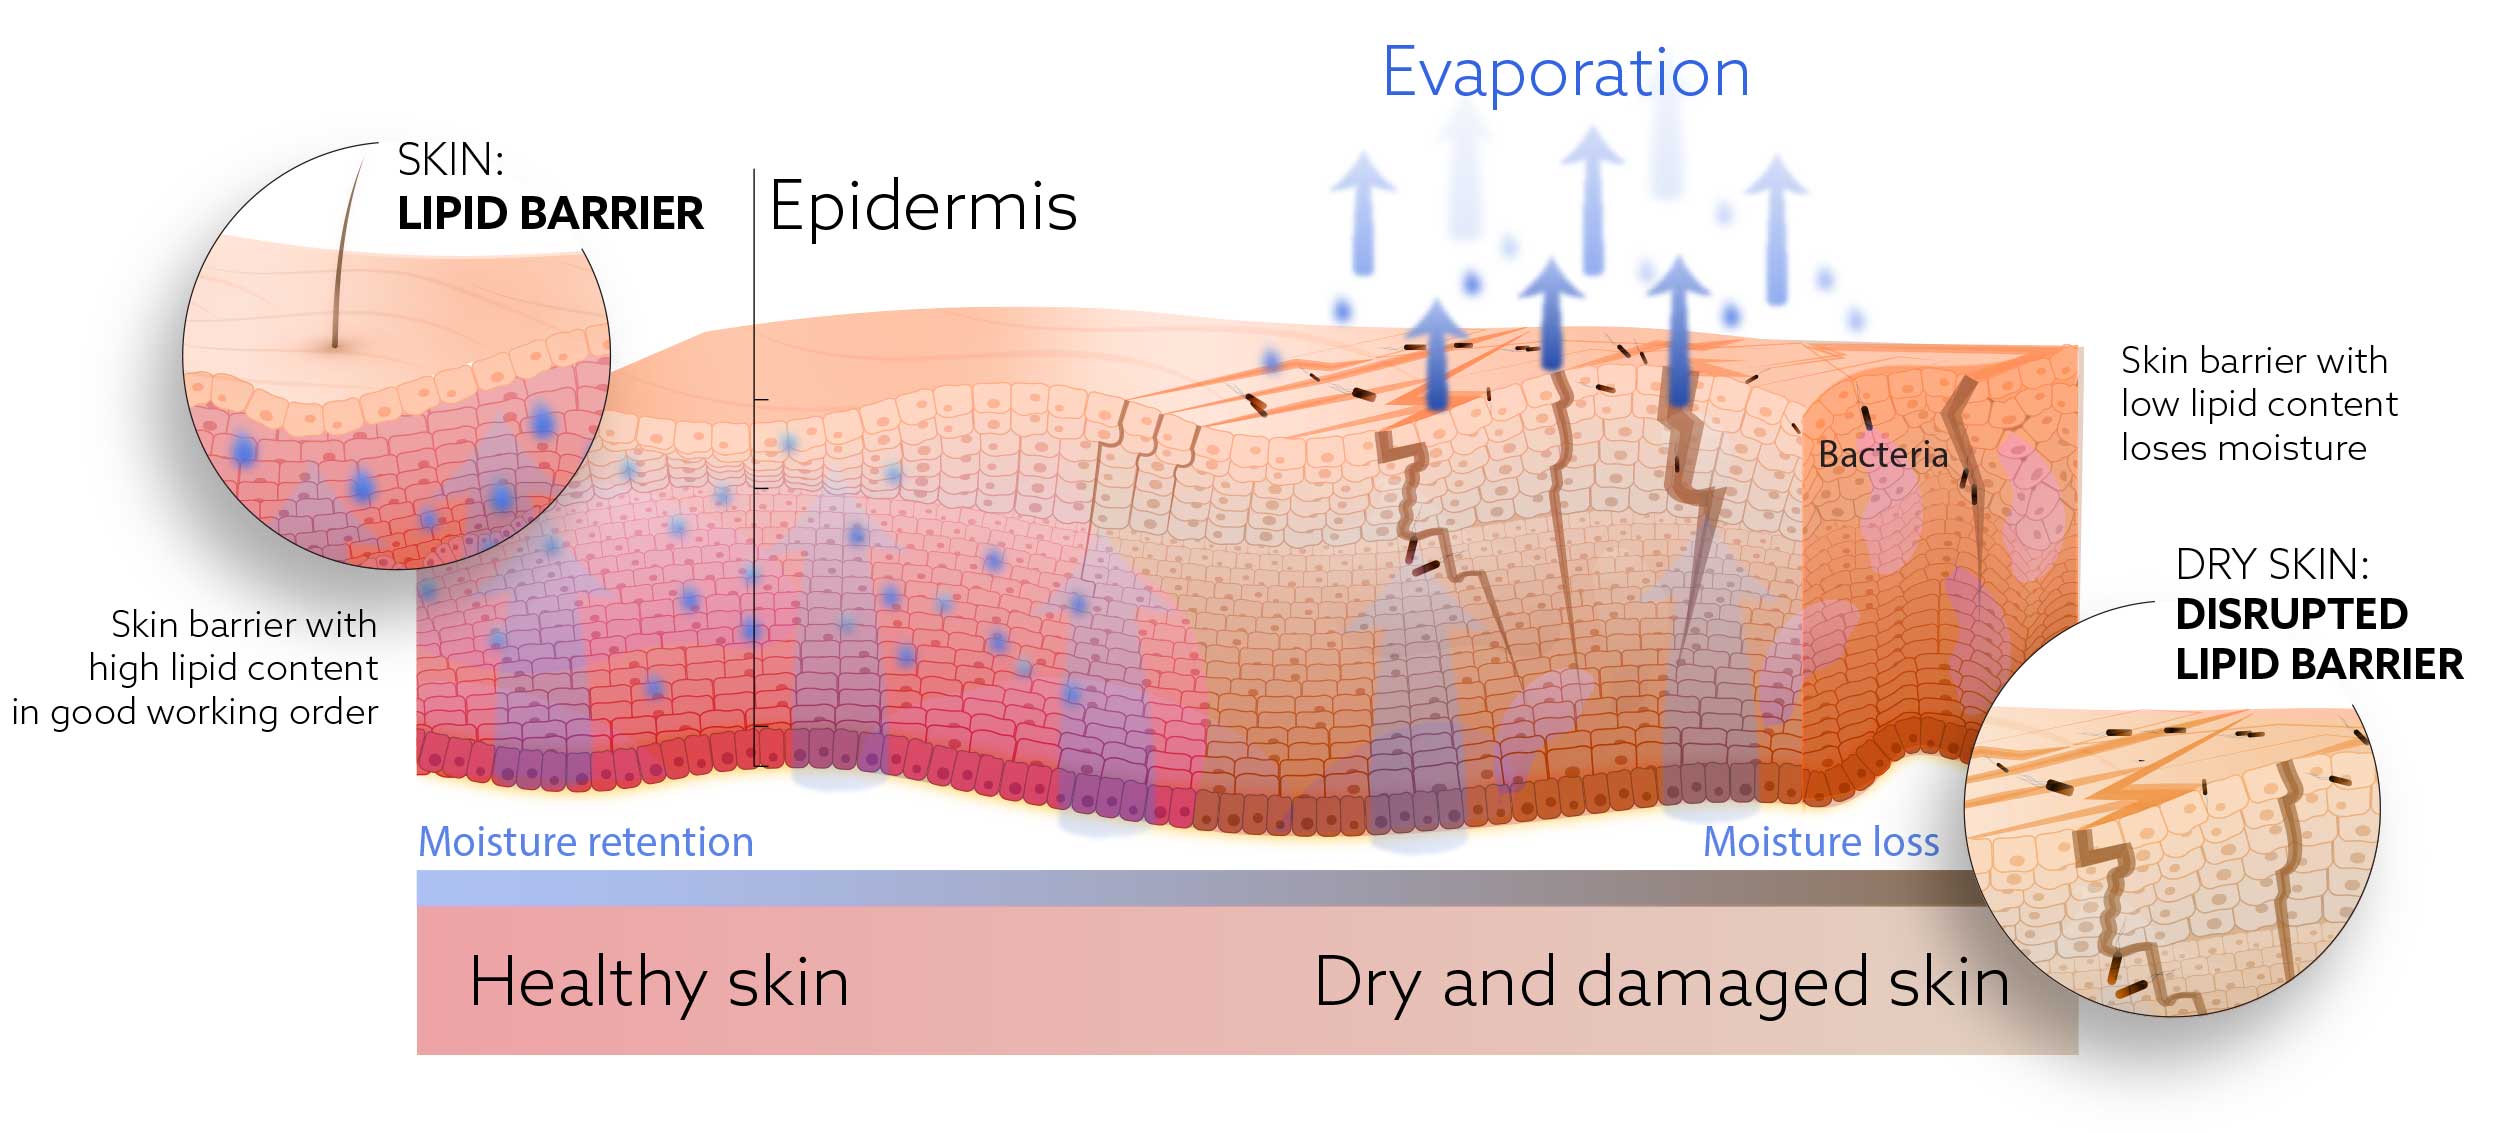 Dry skin hydration krill oil